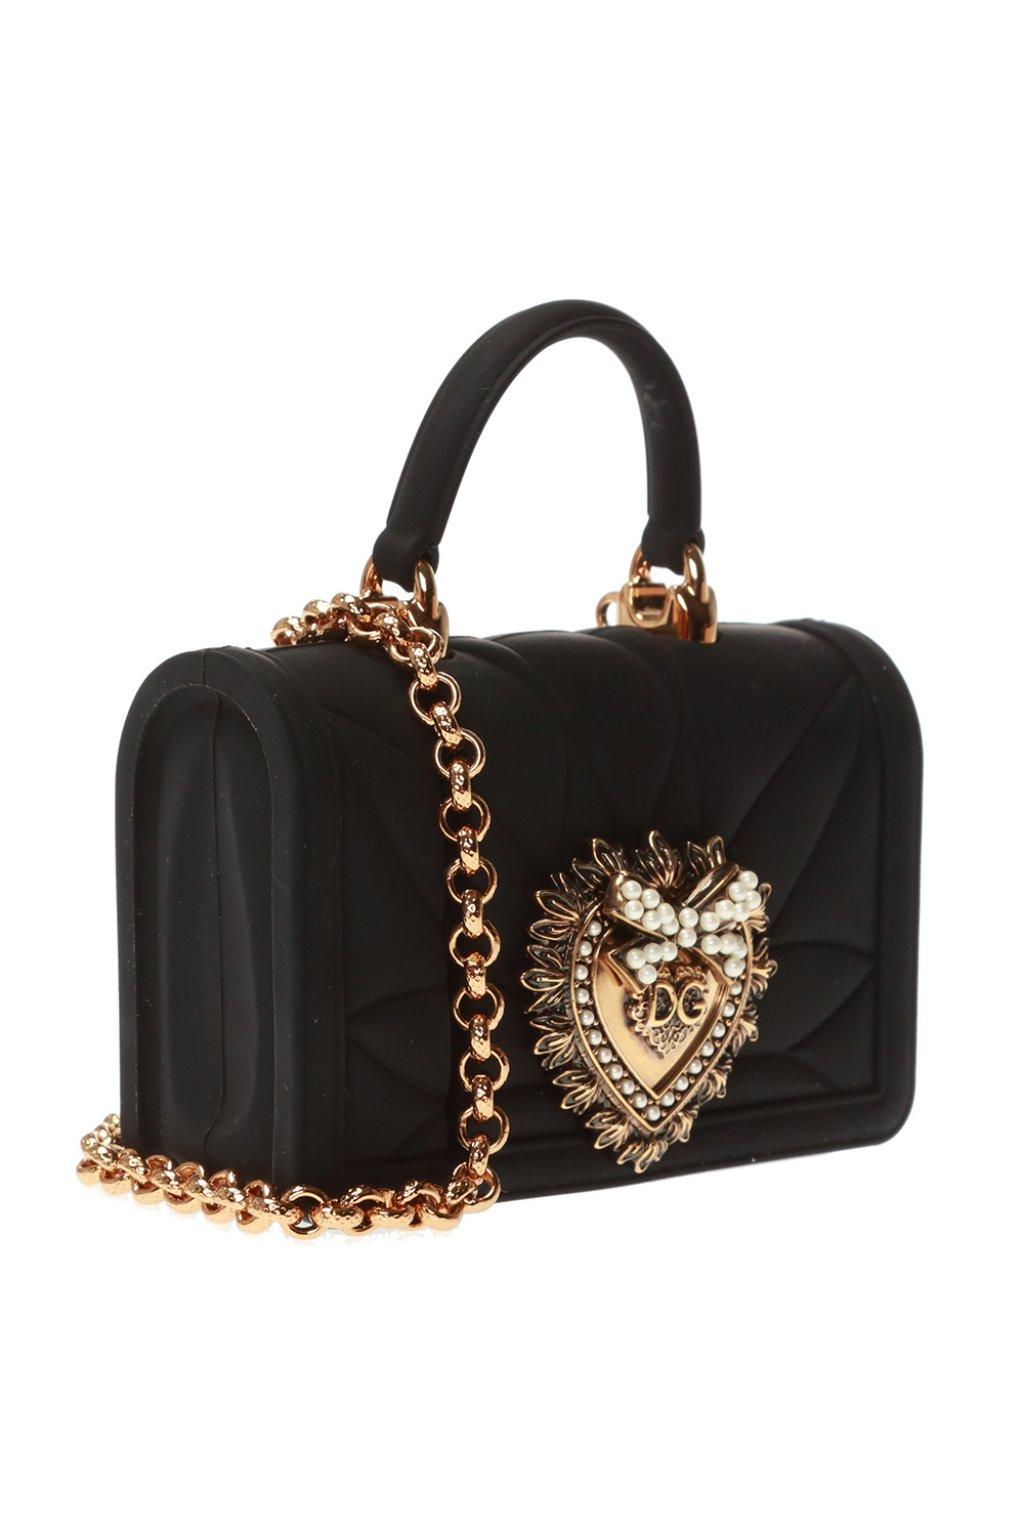 Dolce & Gabbana Devotion Airpods Case in Black - Save 27% - Lyst